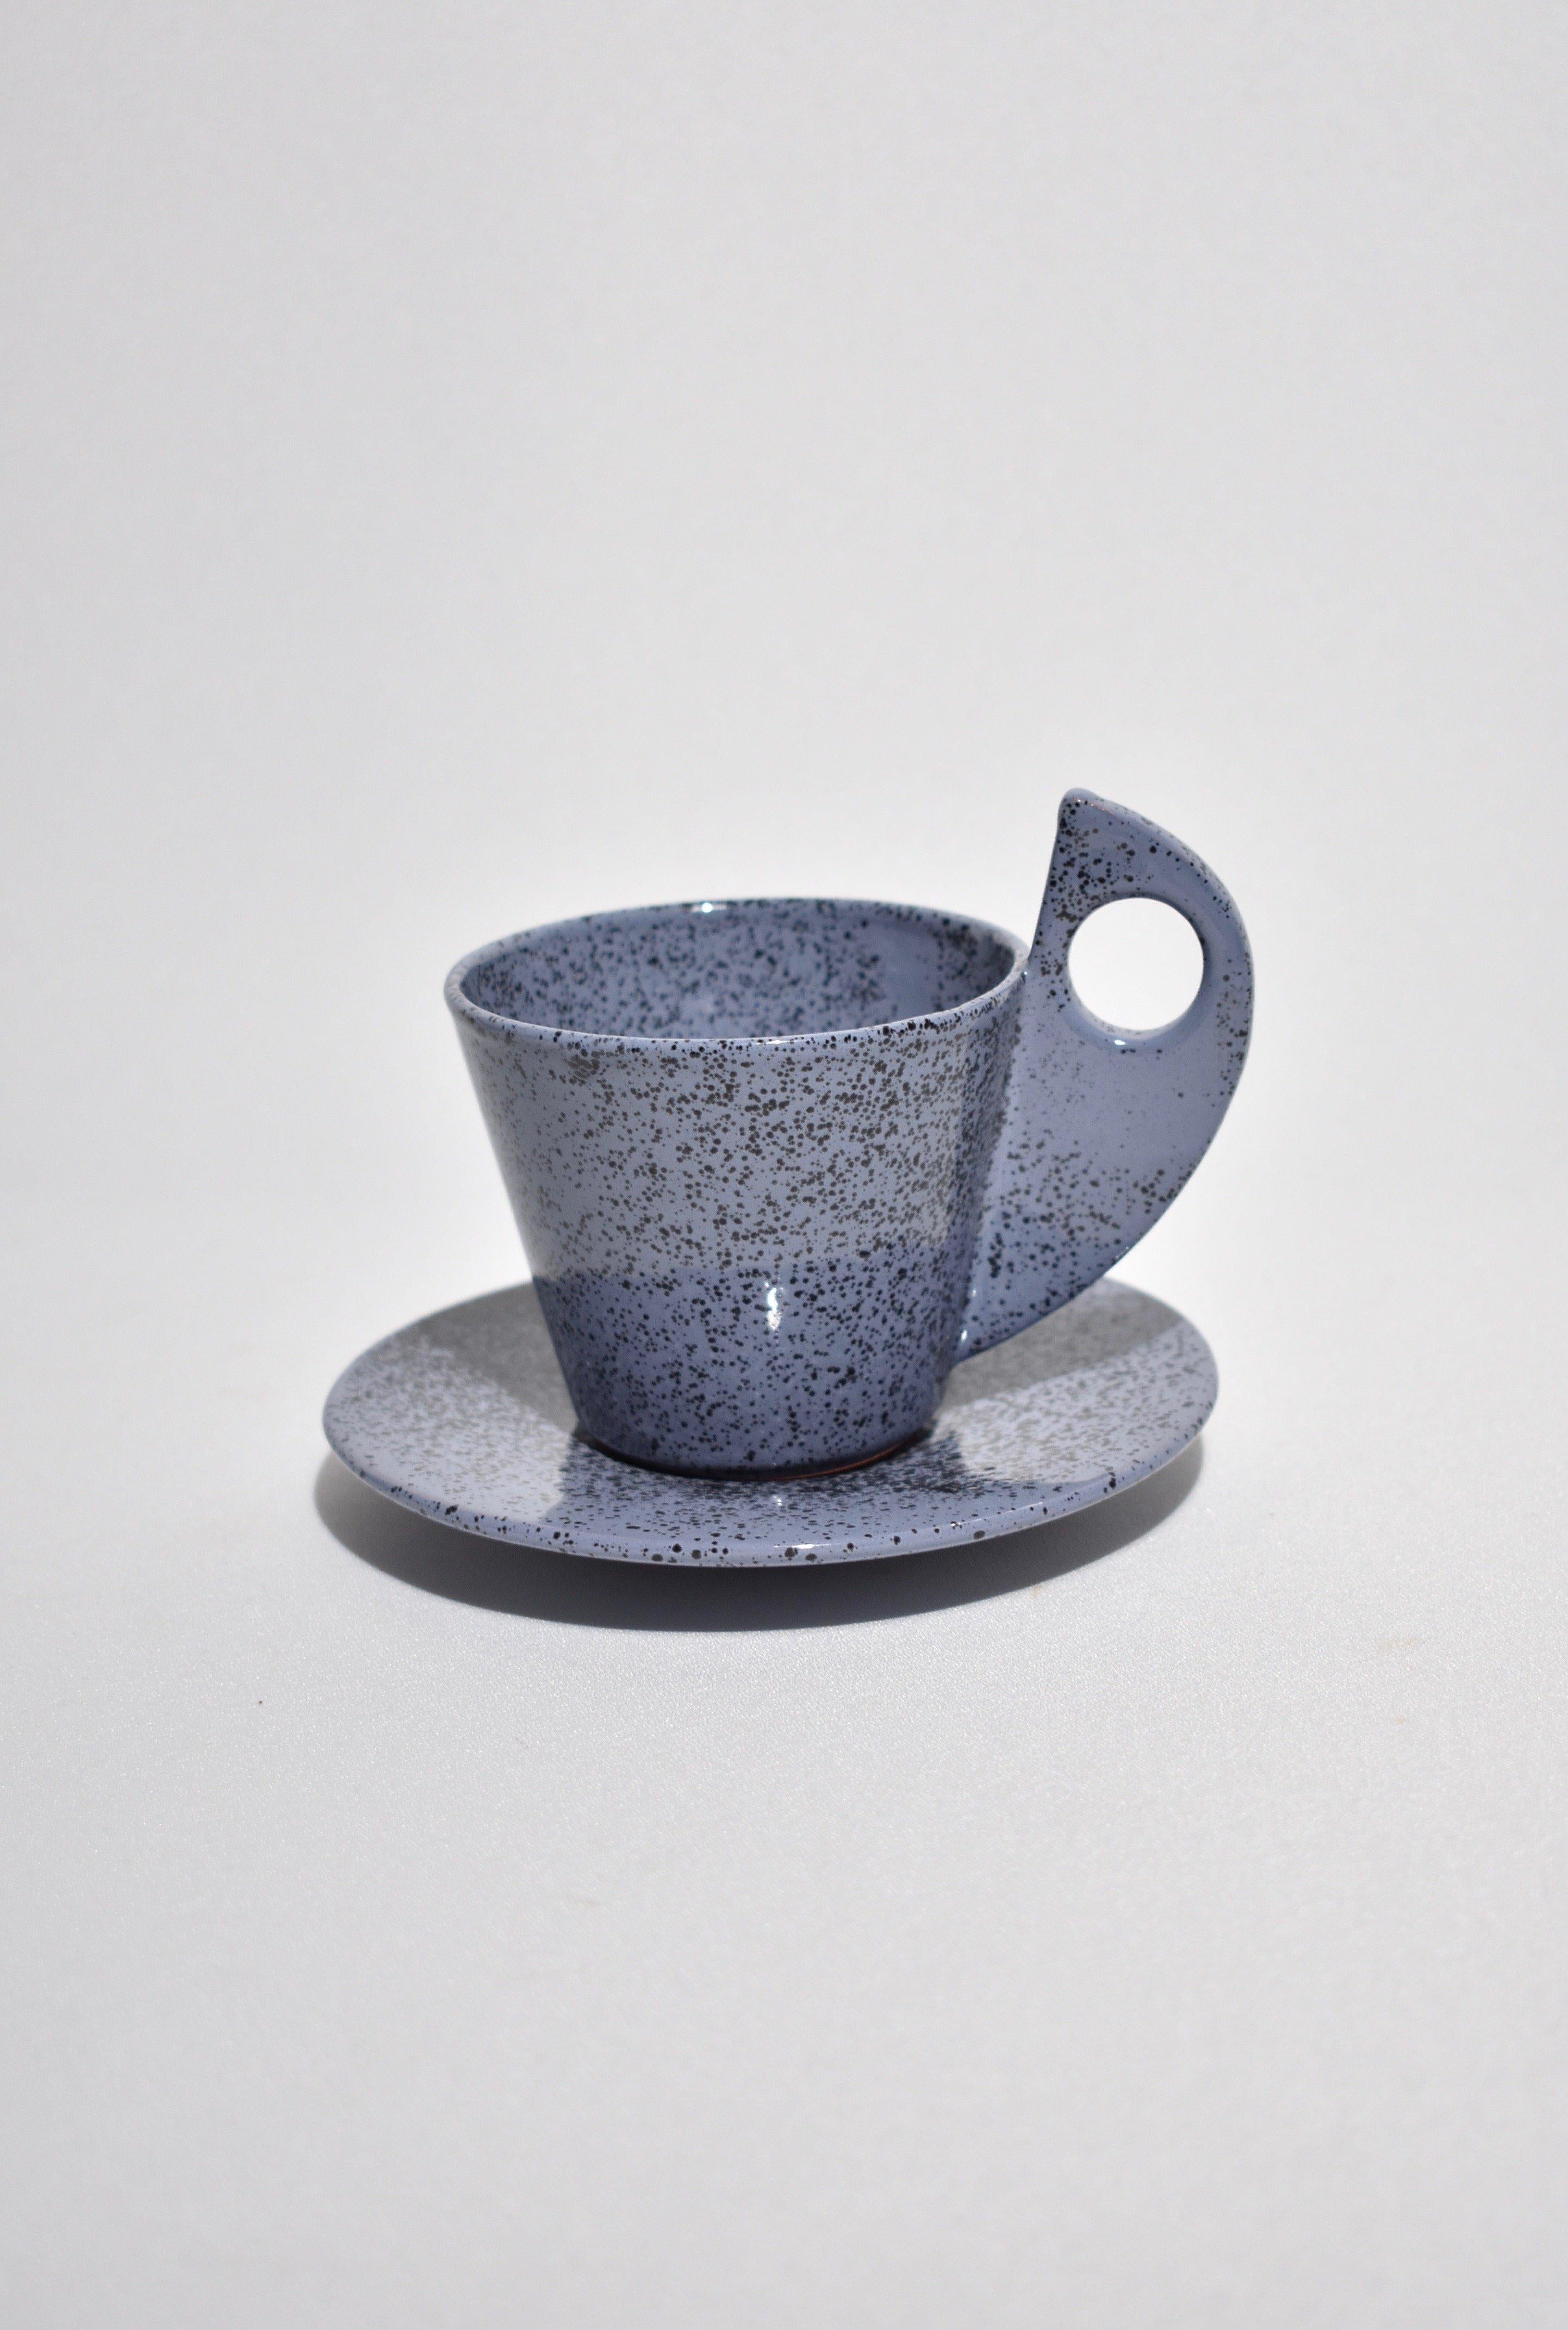 Post-Modern Postmodern Ceramic Teacup Set in Blue Speckle Pattern